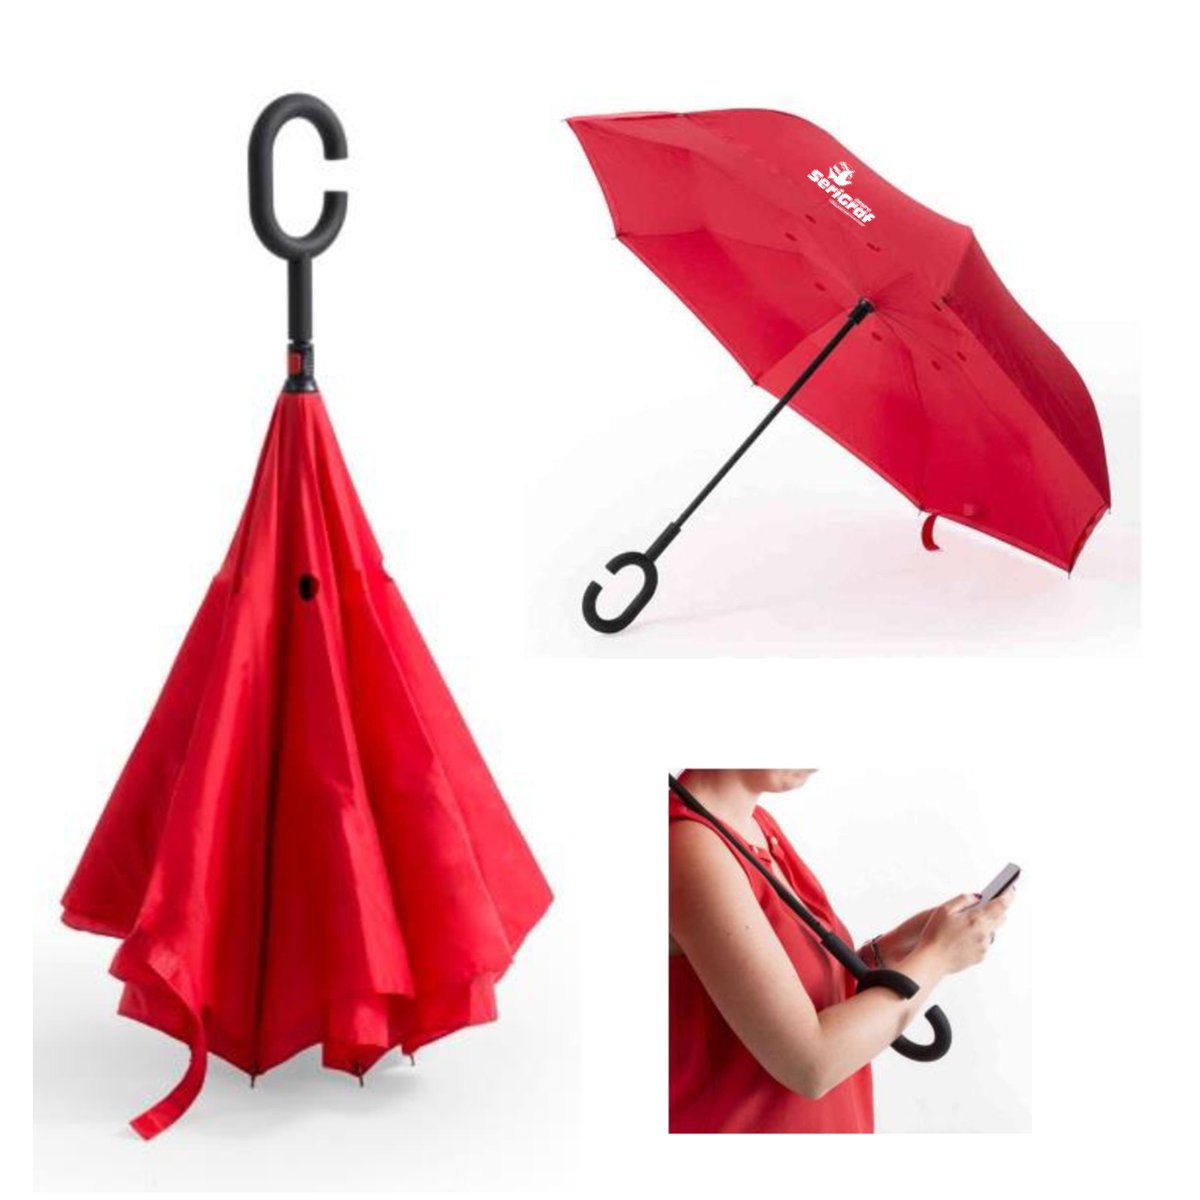 Paraguas reversible con mango para manos libres #gruposerigraf #serigrafiaciudadreal #paraguas #lluvia #felizlunes #reclamopublicitario #merchandising #regalosdeempresa #regalooriginal